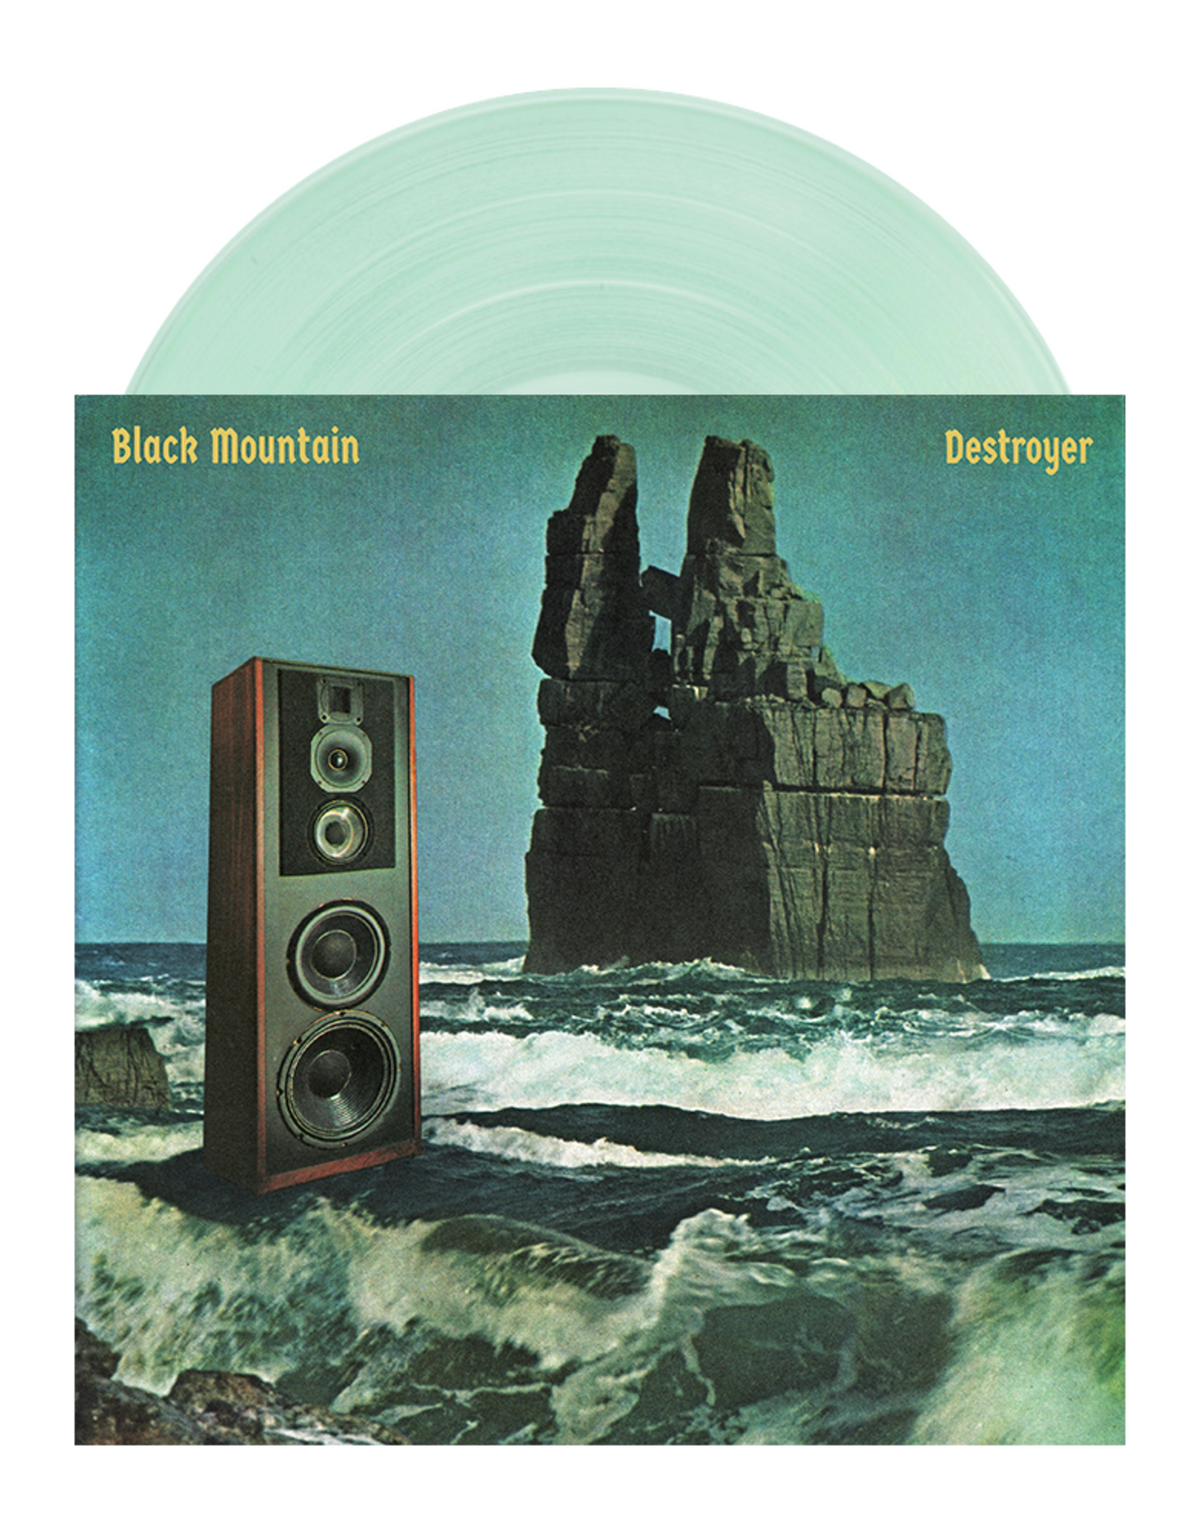 Black Mountain – Destroyer LP (Limited Edition Coke Bottle Vinyl)